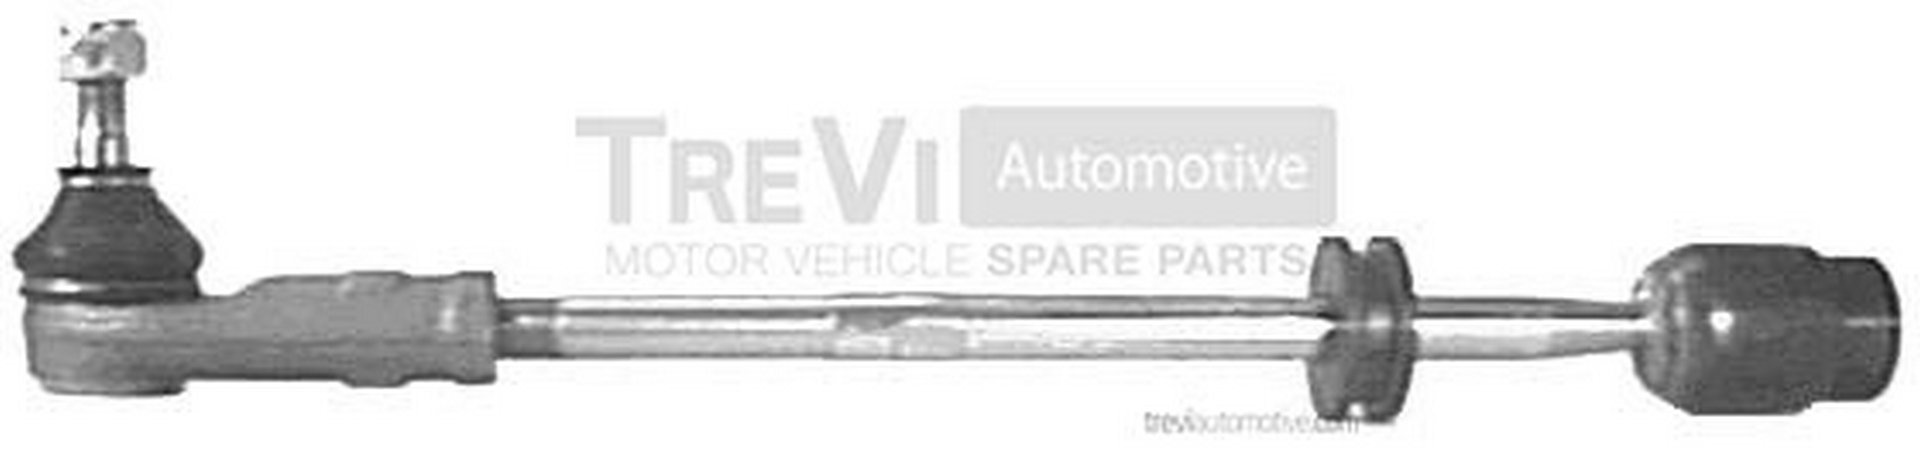 TREVI AUTOMOTIVE TRTT5504